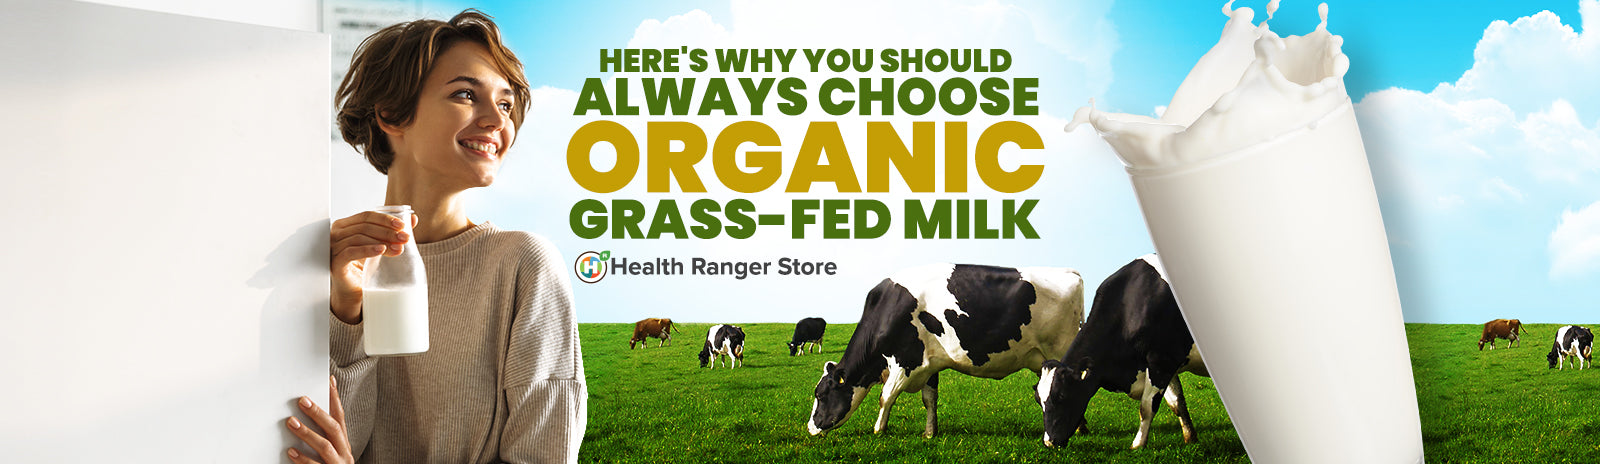 Reasons to choose organic grass fed milk